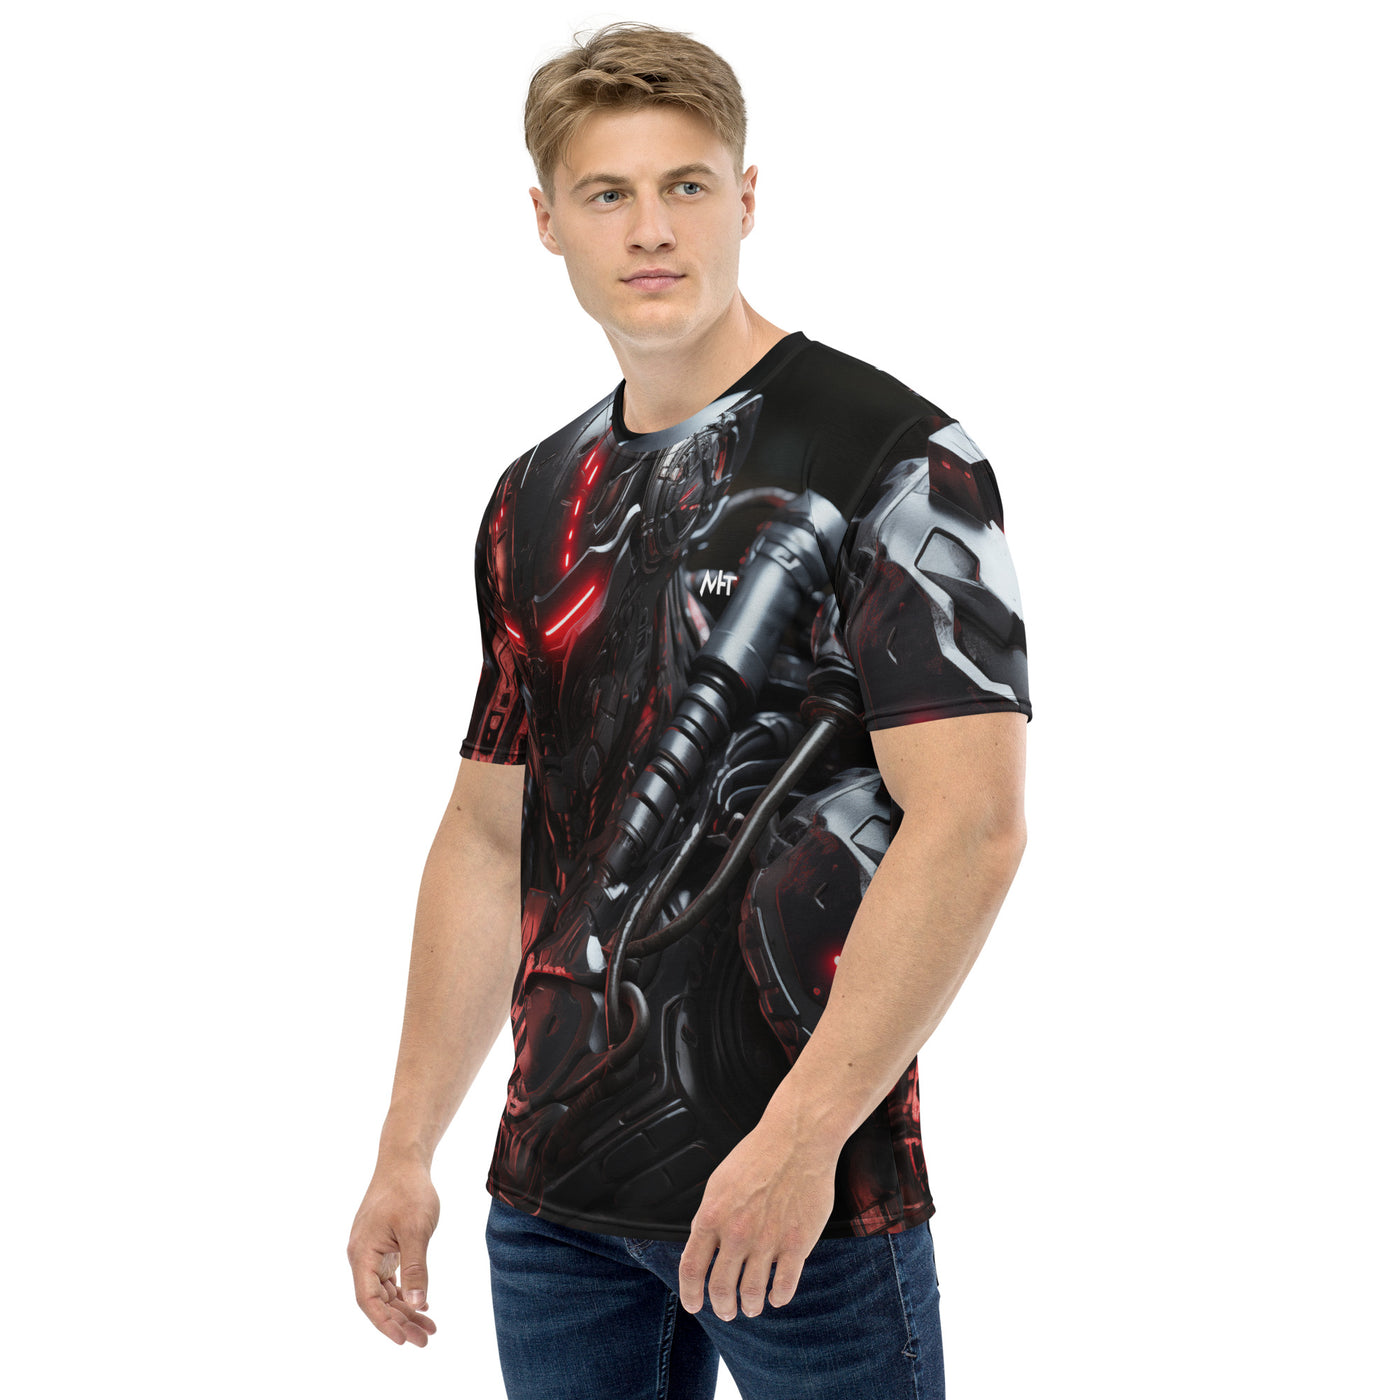 CyberArms Warrior v30 - Men's t-shirt